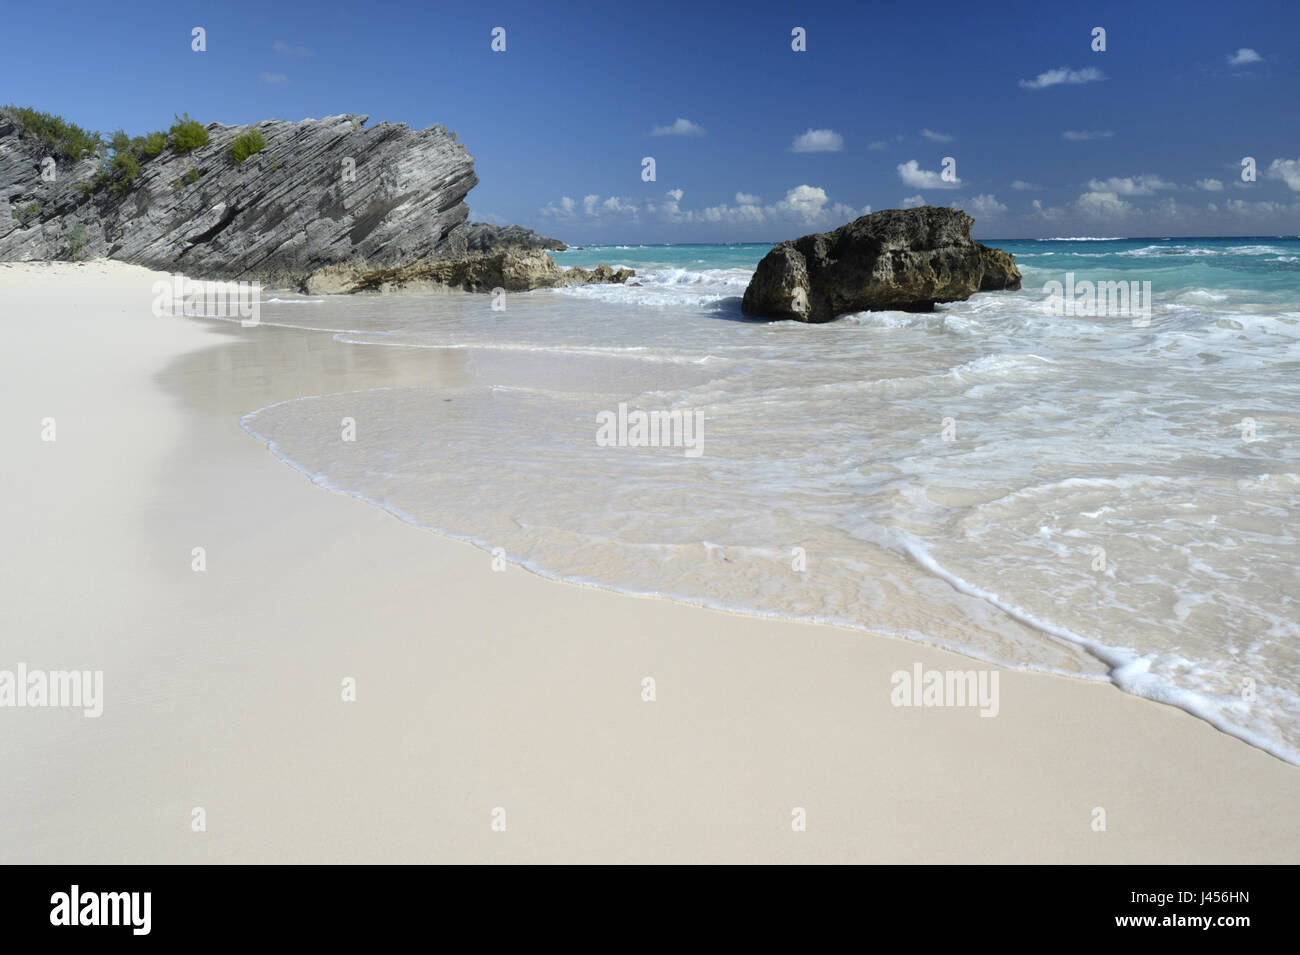 Idylic sandy beach on the island of Bermuda, a British territory in the North Atlantic Ocean. Stock Photo